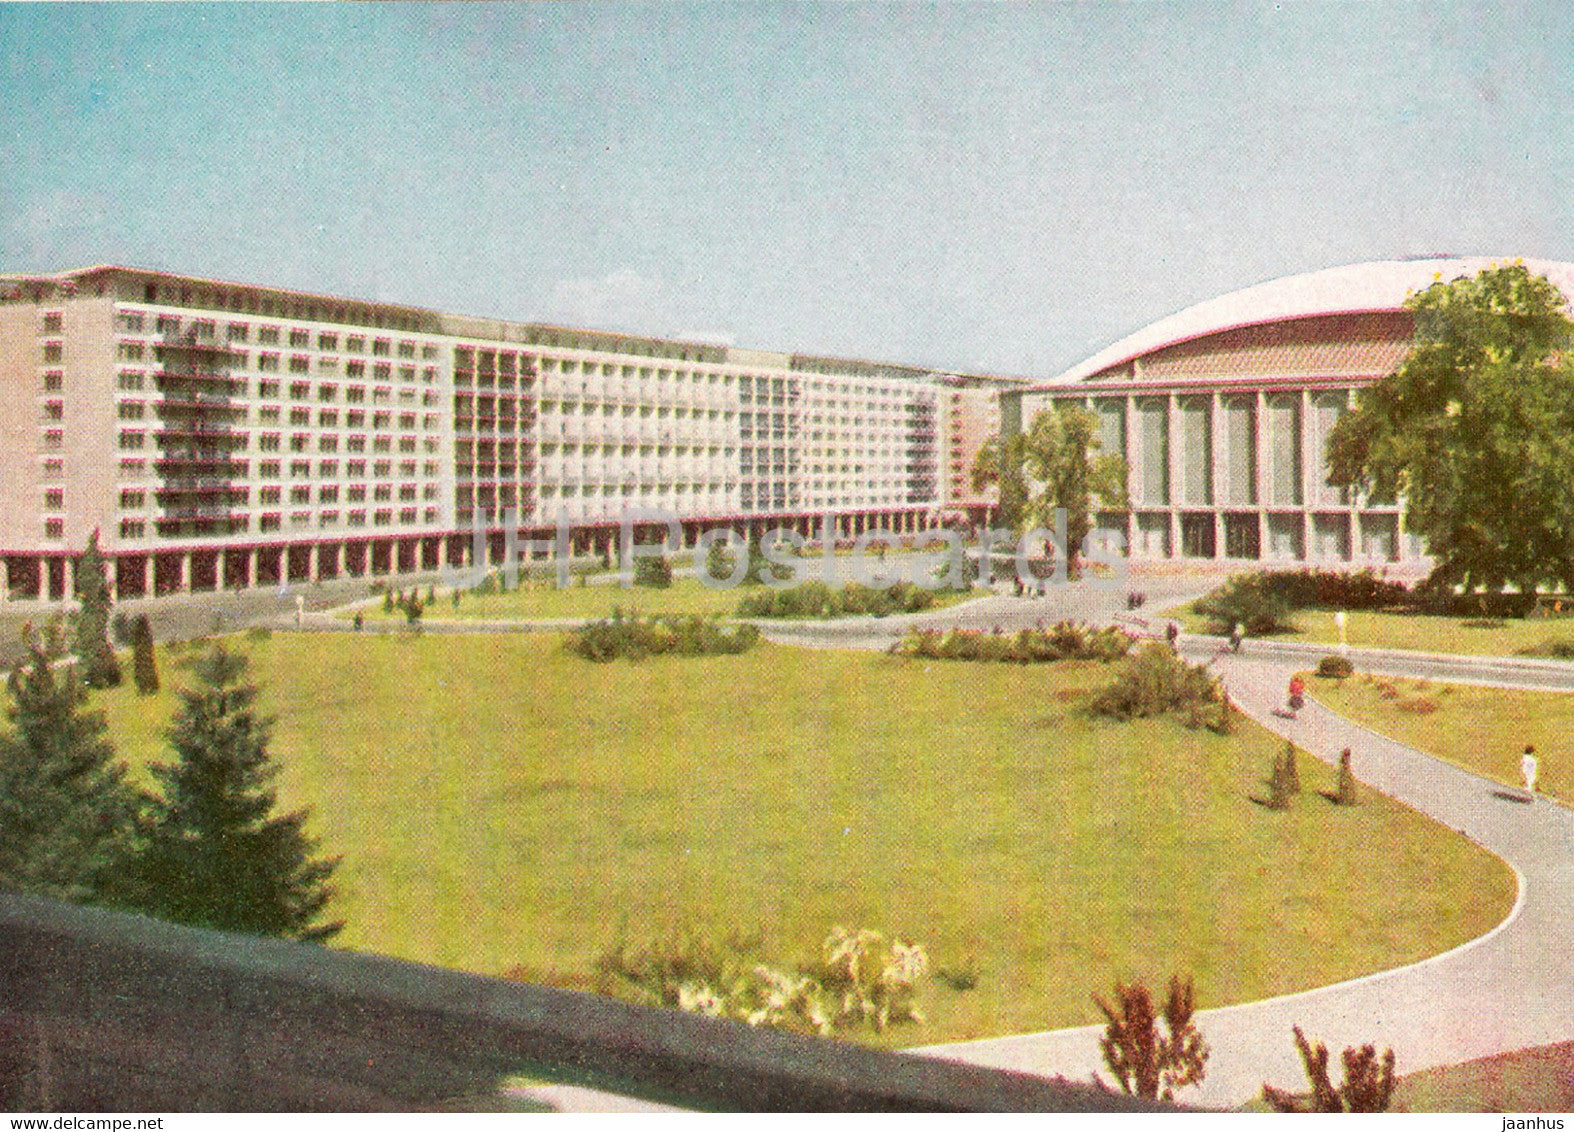 Bucharest - Palace Square - 1965 - Romania - unused - JH Postcards